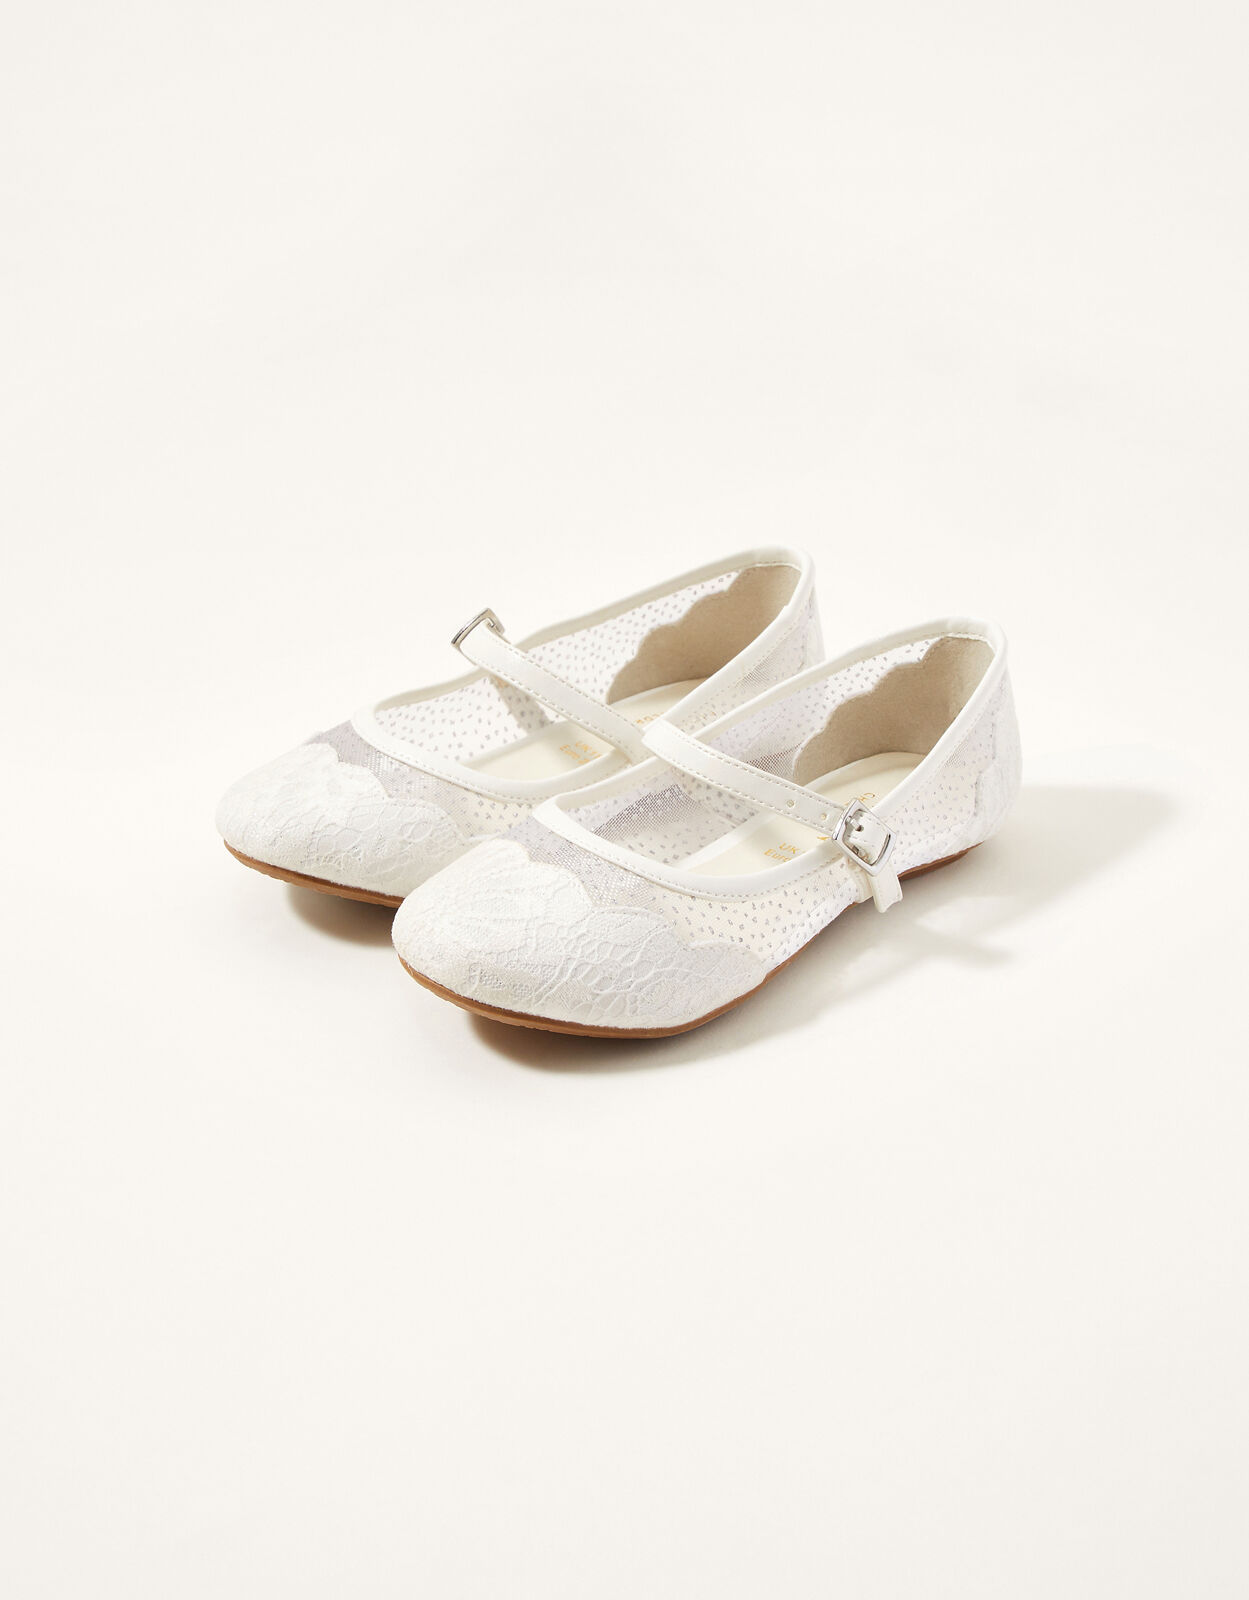 UK Womens Pearls Lace Mary Jane Flats Princess Wedding White Bridal Shoes Ballet 